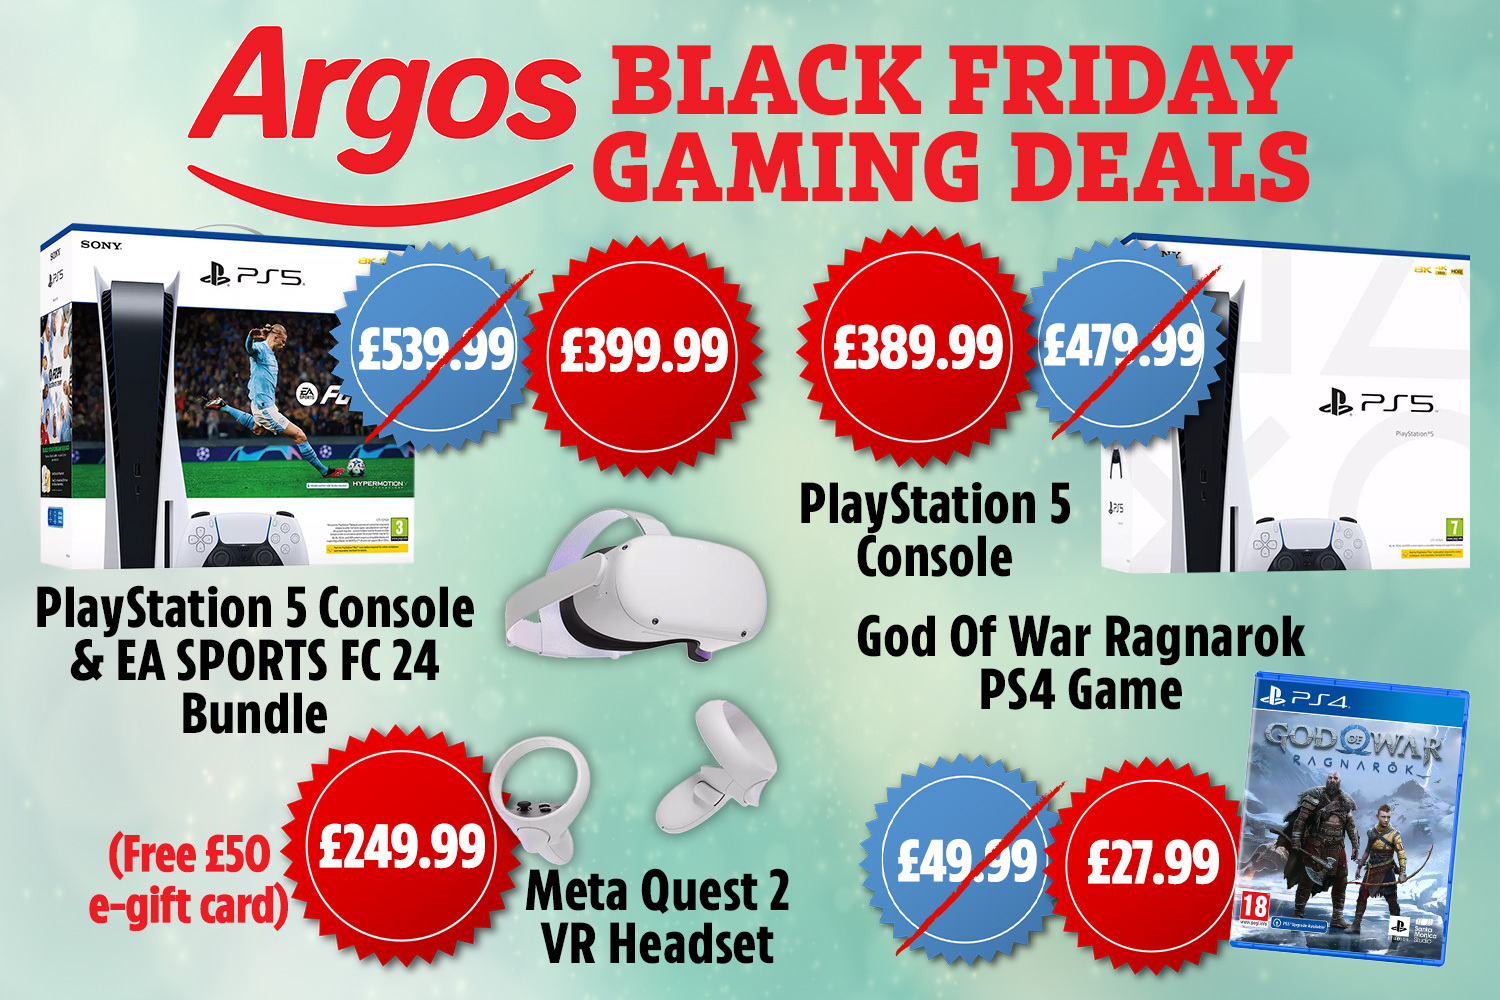 Live gaming deals on Argos